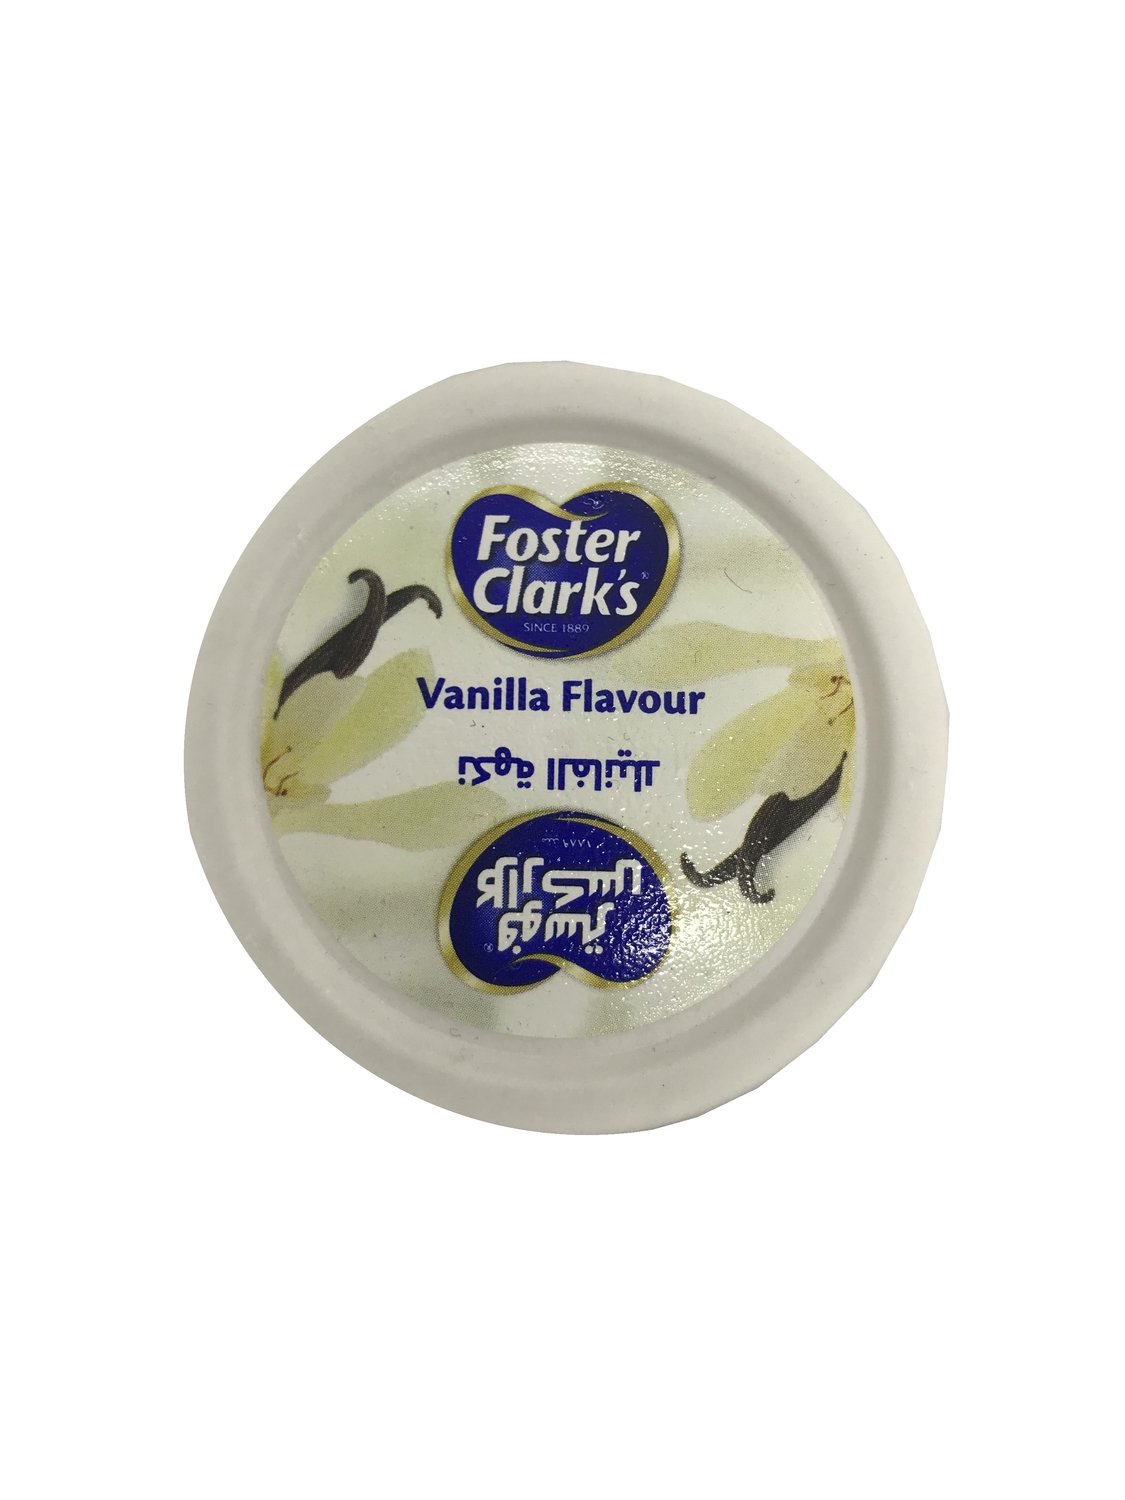 Foster Clark's Vanilla Flavor 15g